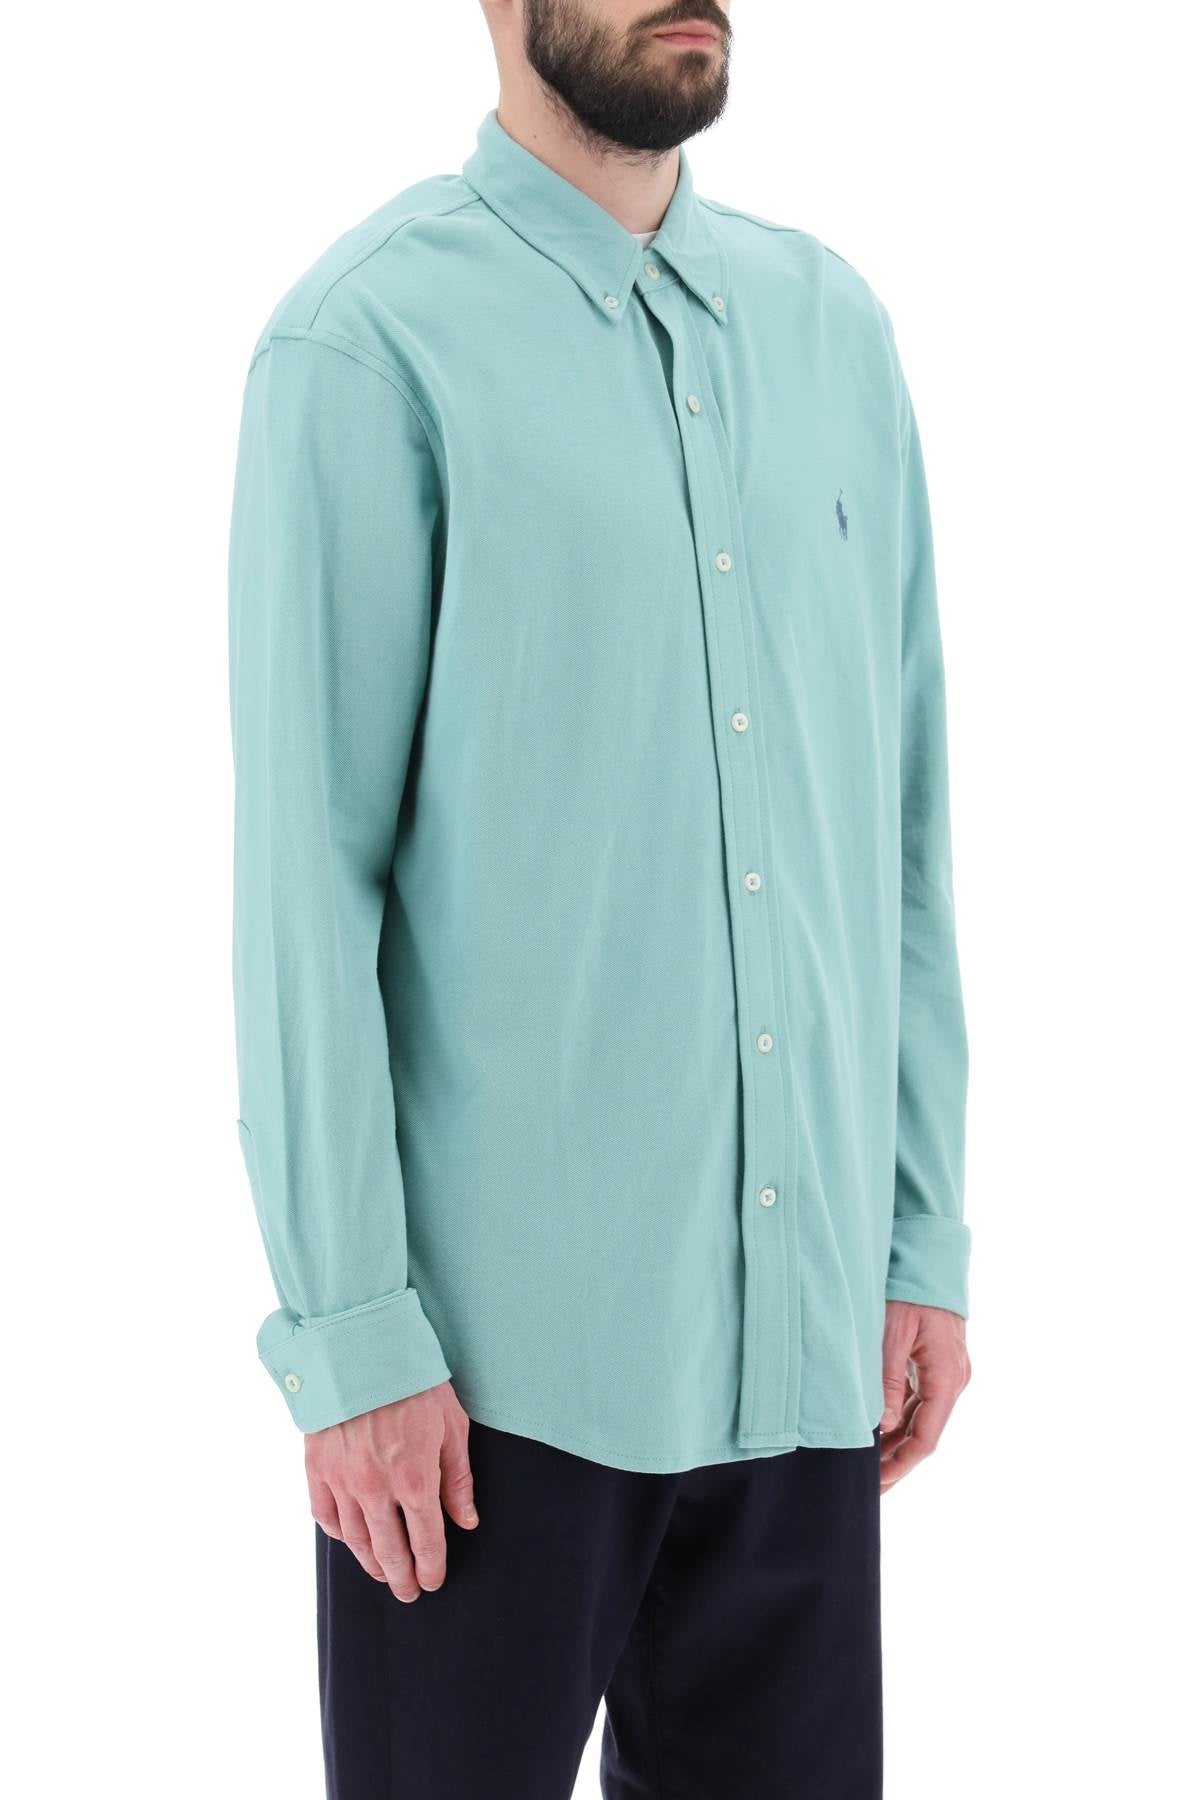 Polo ralph lauren long-sleeved polo shirt in lightweight cotton mesh